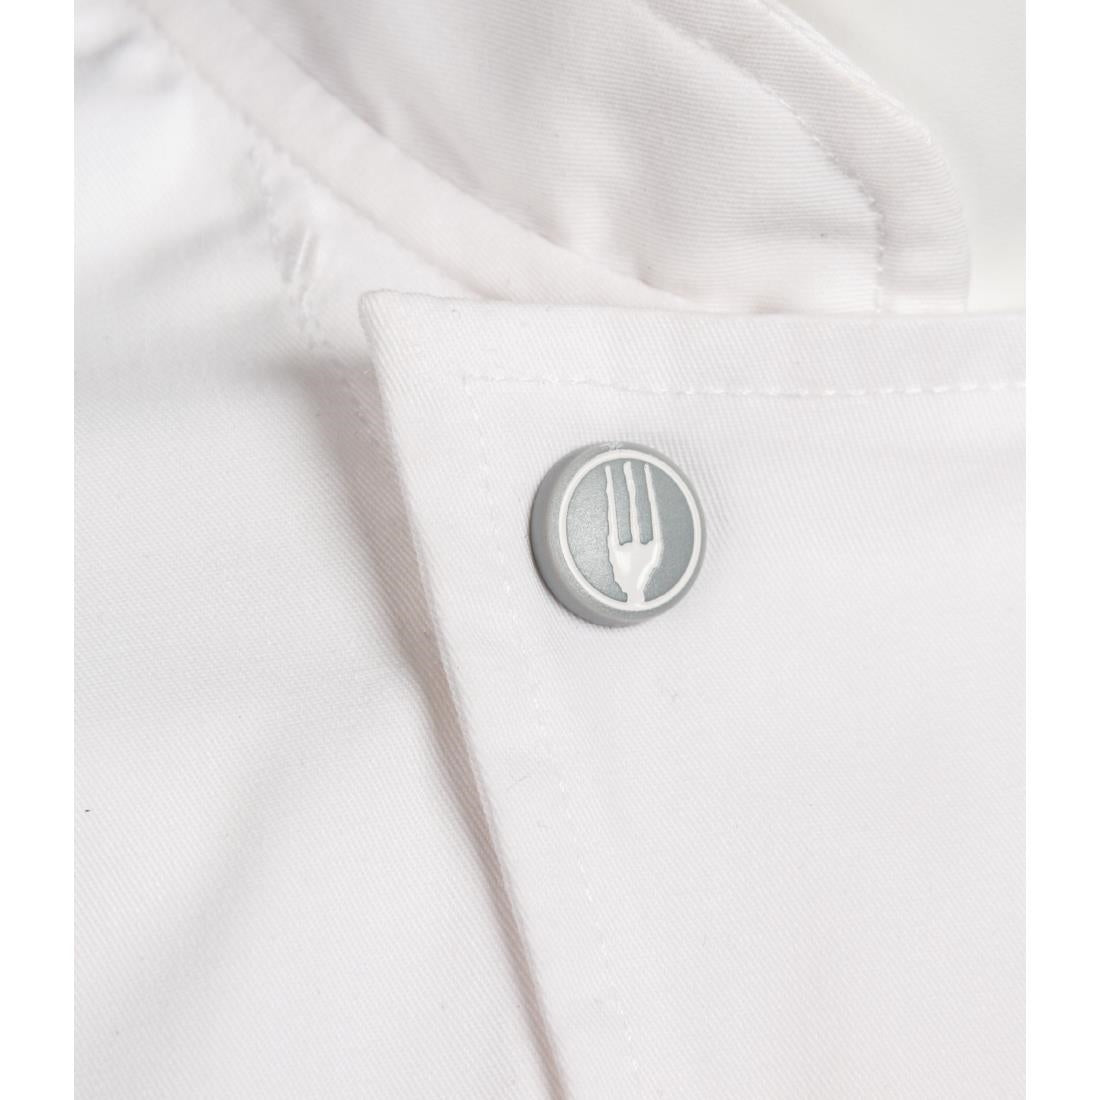 B205-S Chef Works Valais Signature Series Unisex Chefs Jacket White S